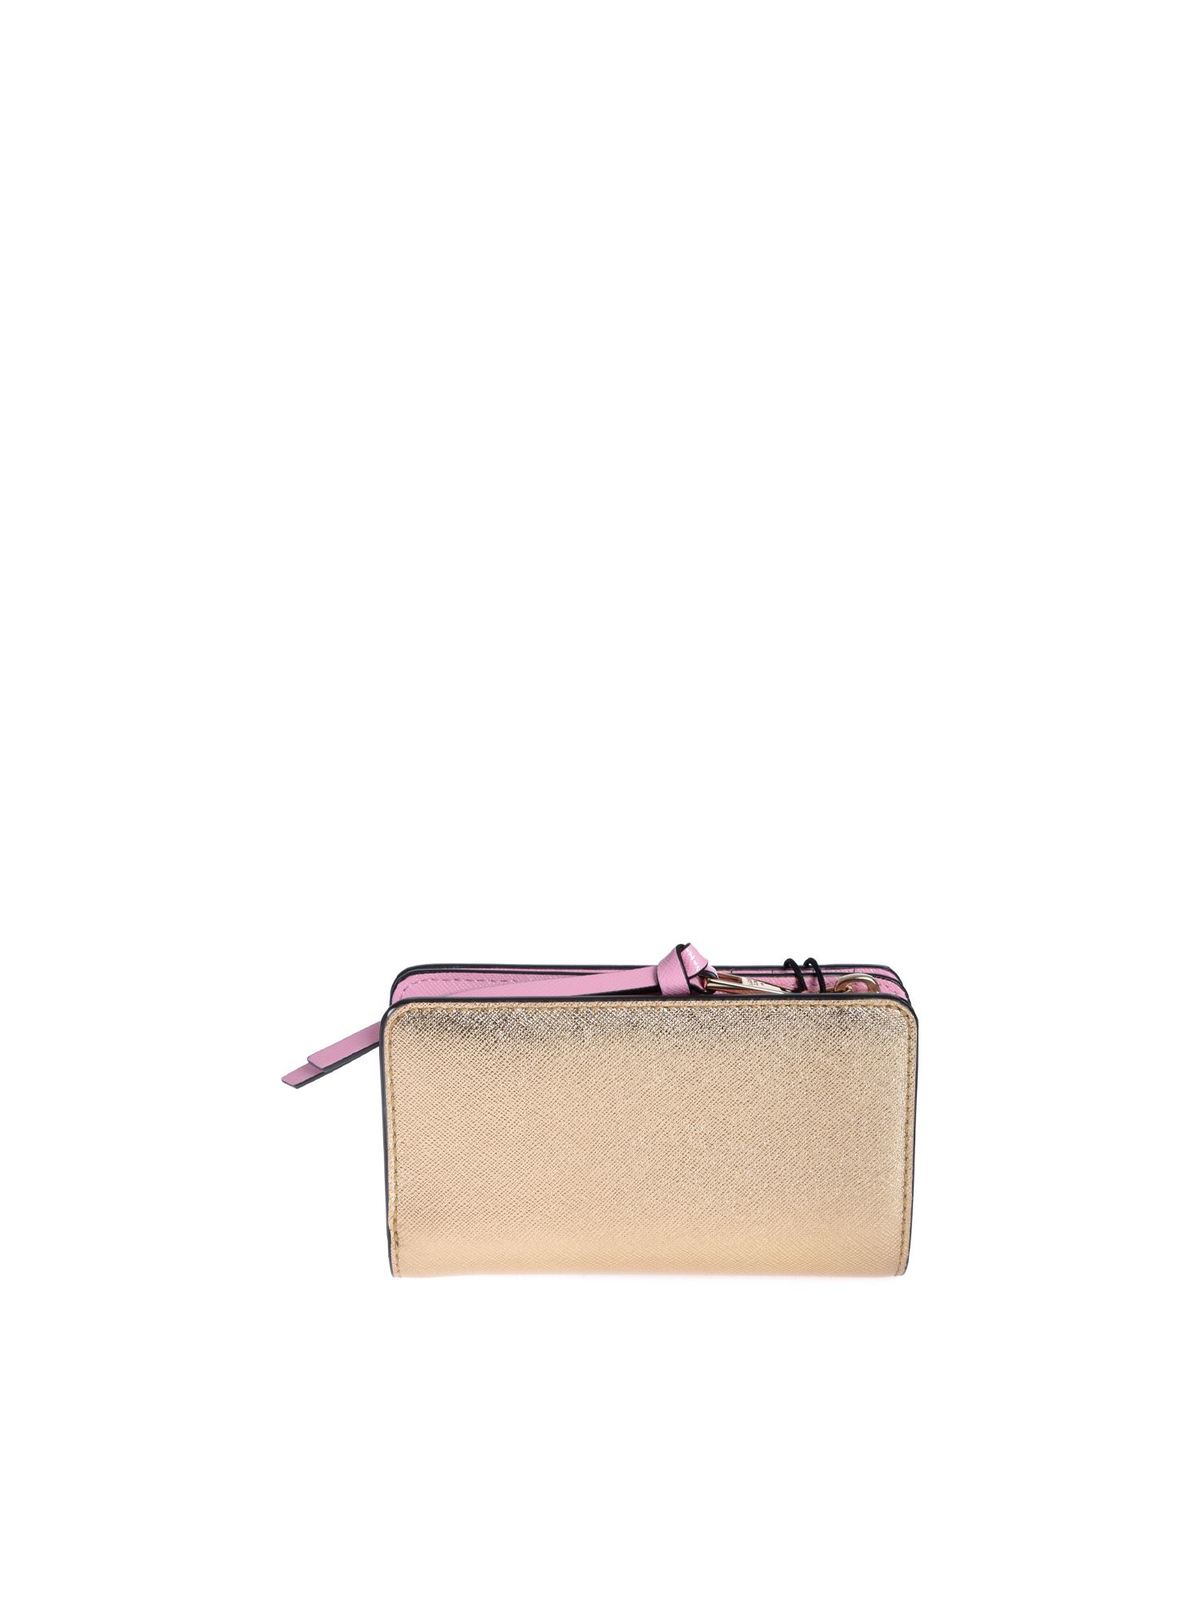 Marc Jacobs Snapshot Standard Continental Wallet- Black/Multi M0014280-002  191267440361 - Handbags - Jomashop